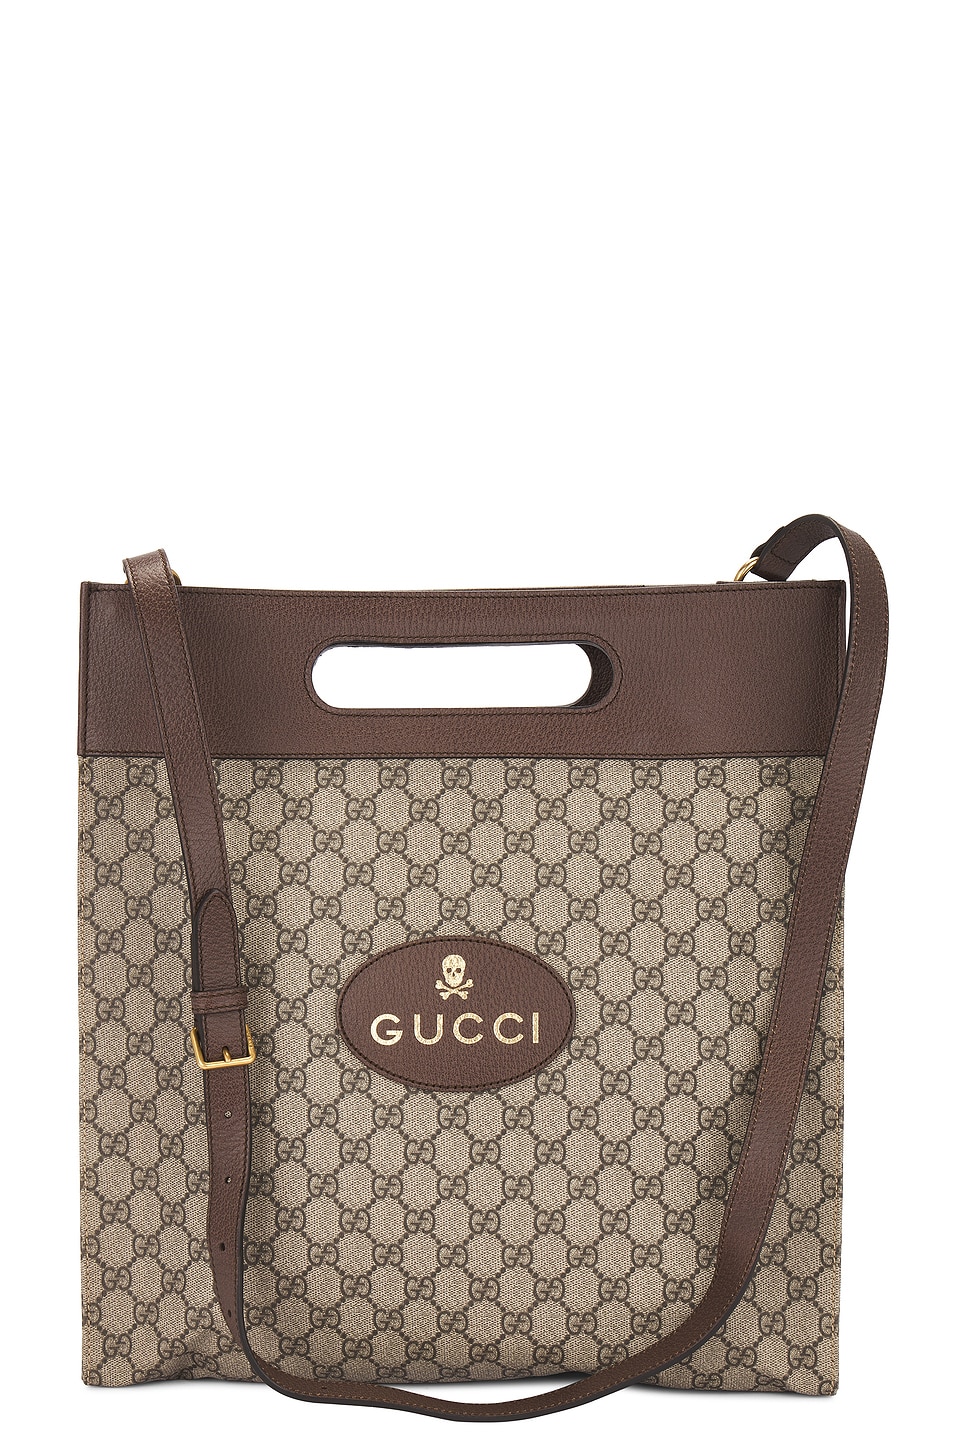 Gucci Gg Supreme 2 Way Tote Bag In Burgundy